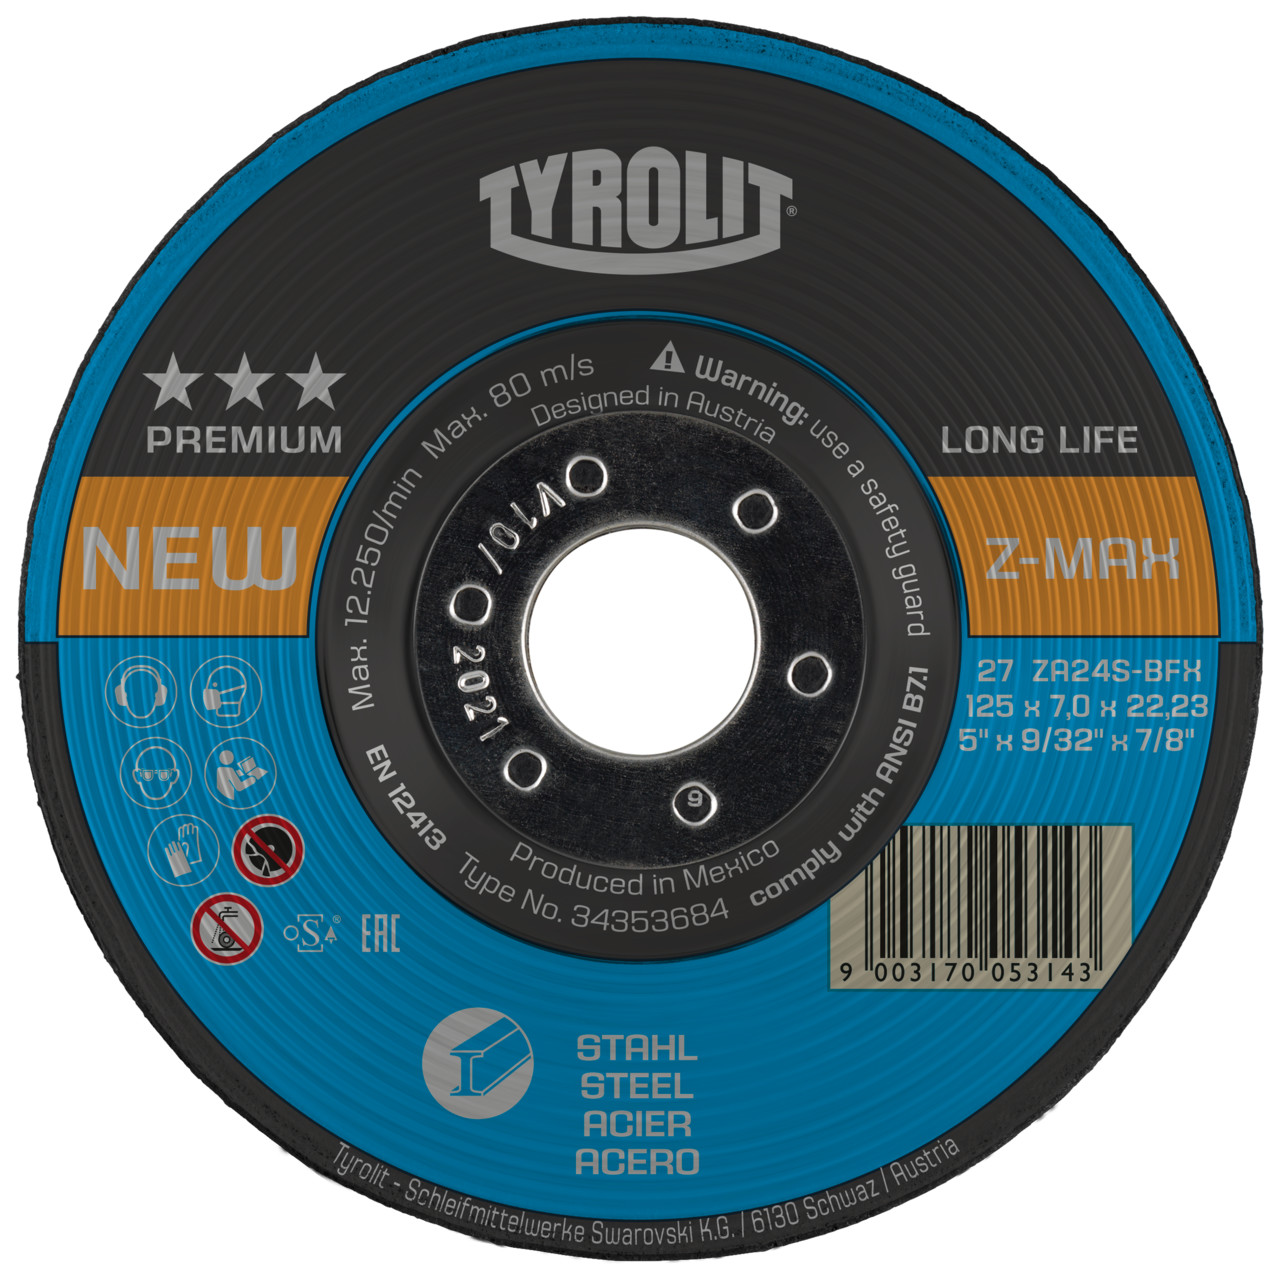 Tyrolit Rough grinding disc DxUxH 115x4x22.23 LONGLIFE Z-MAX for steel, shape: 27 - offset version, Art. 34353701